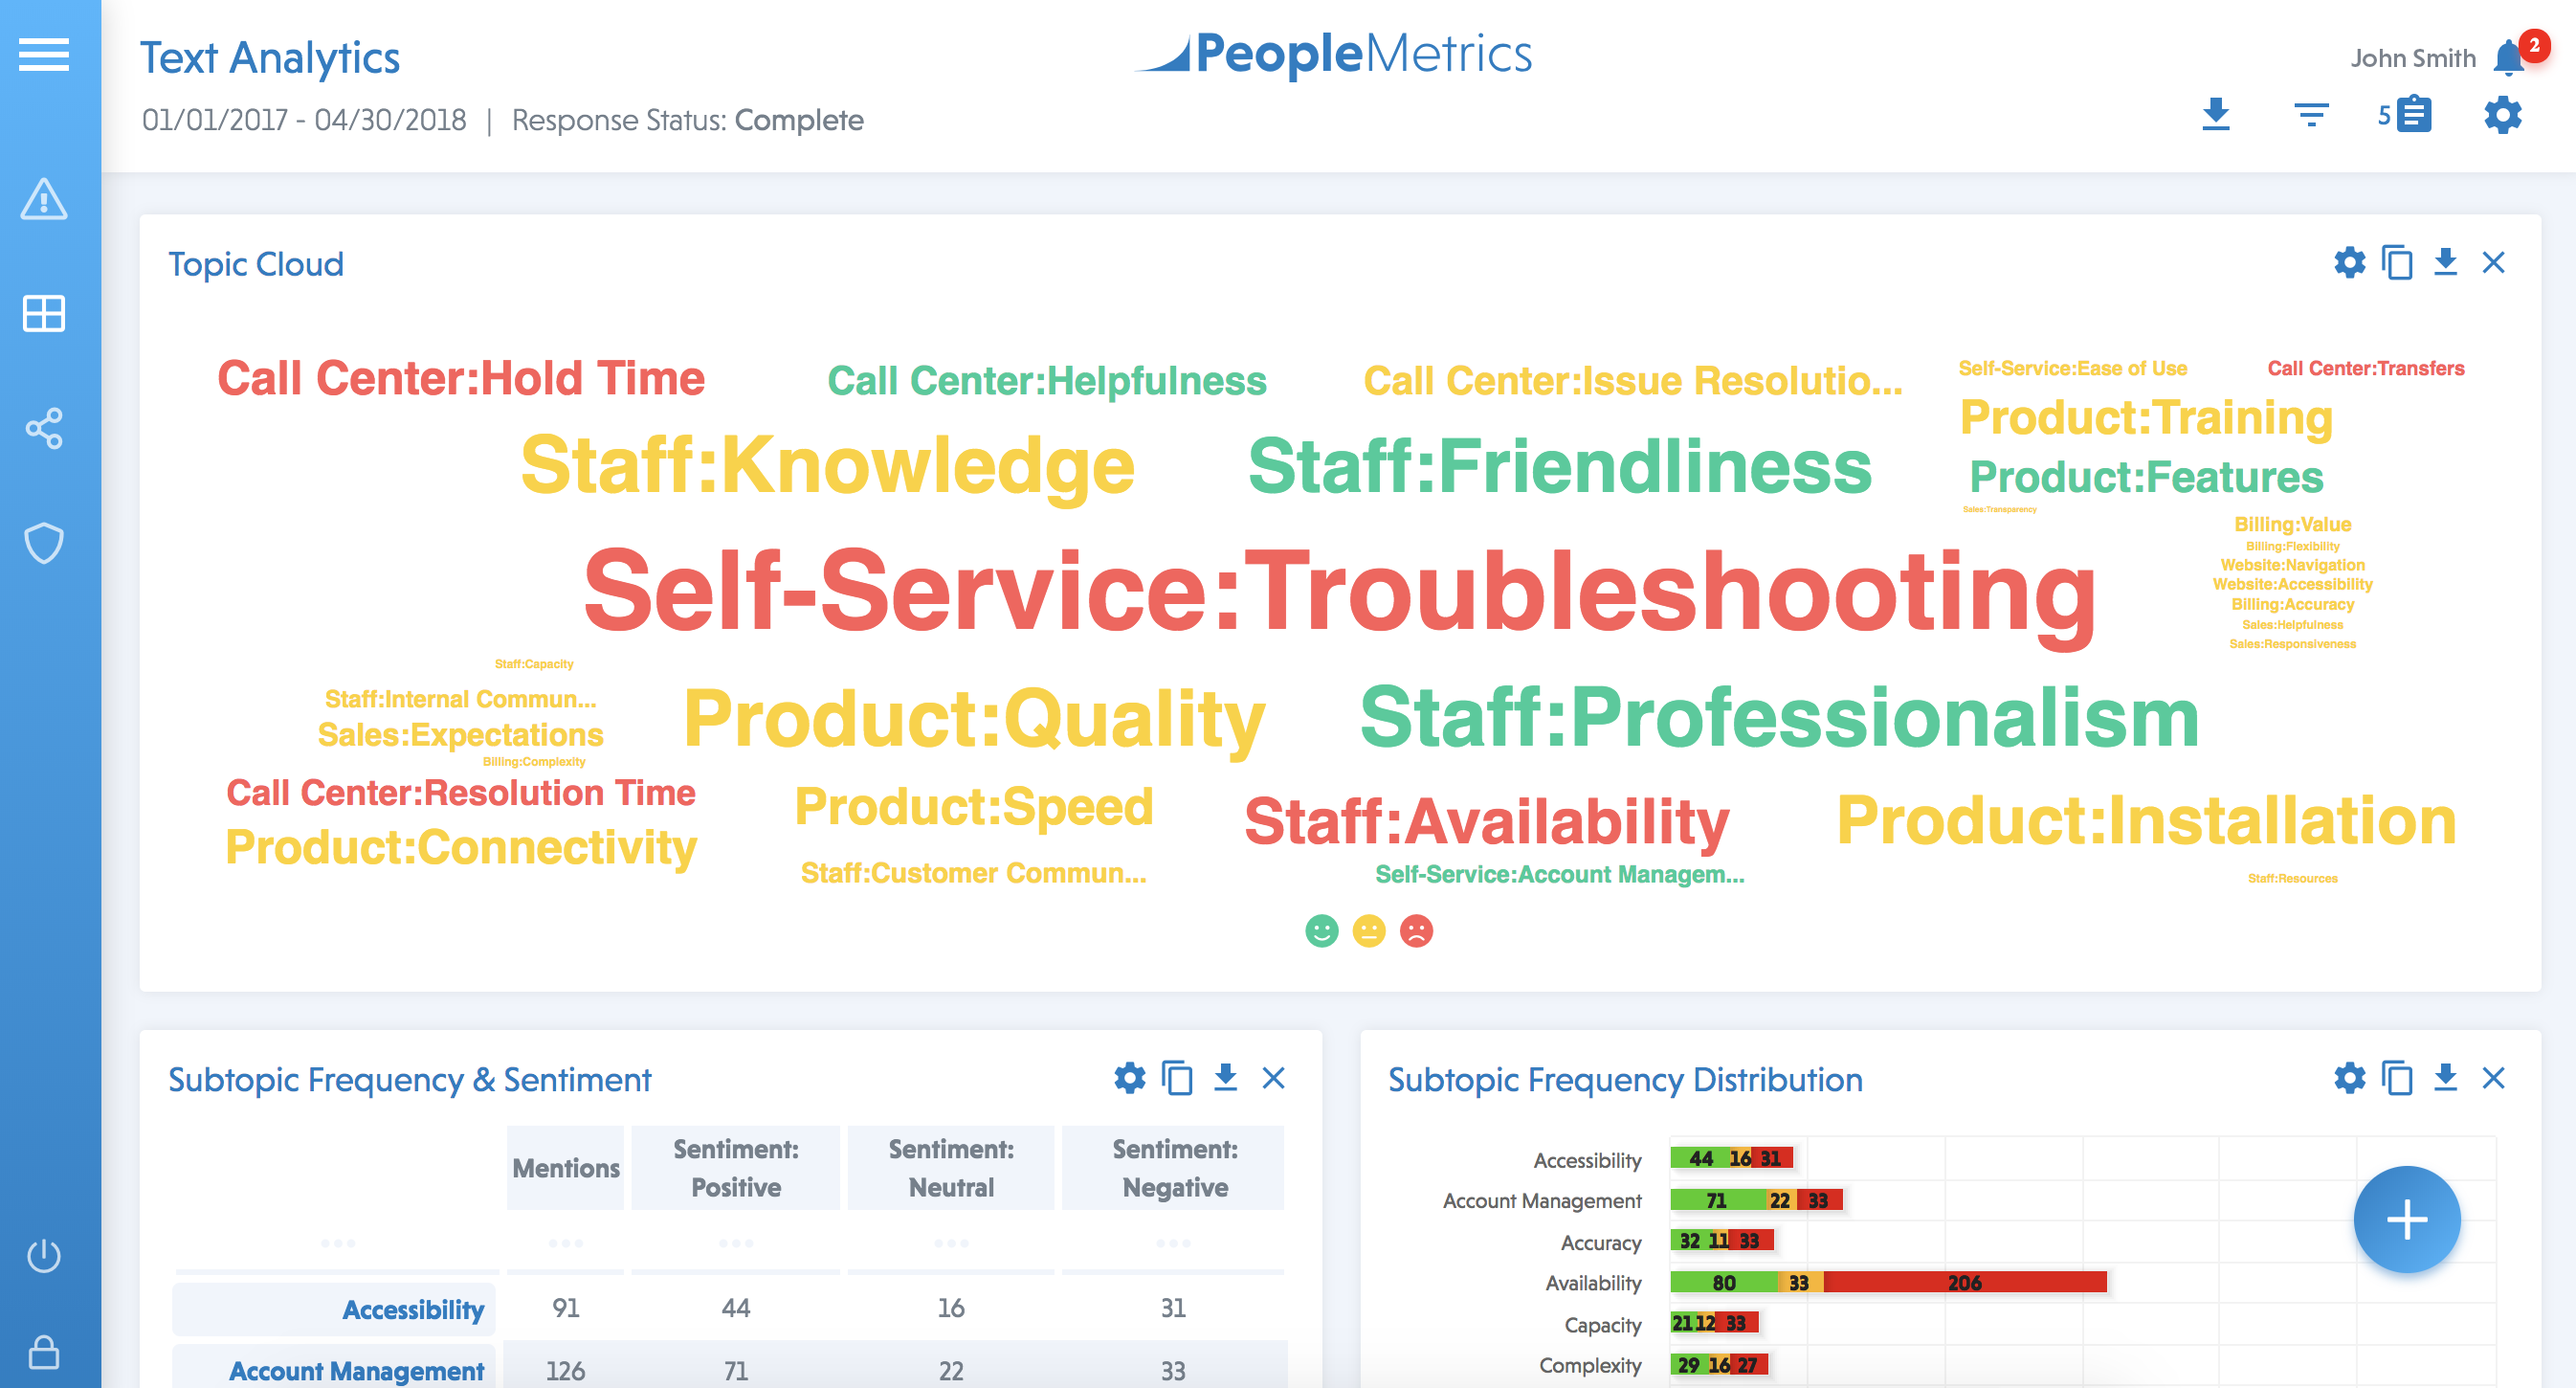 Text Analytics in the PeopleMetrics Customer Experience Management (CEM) Platform